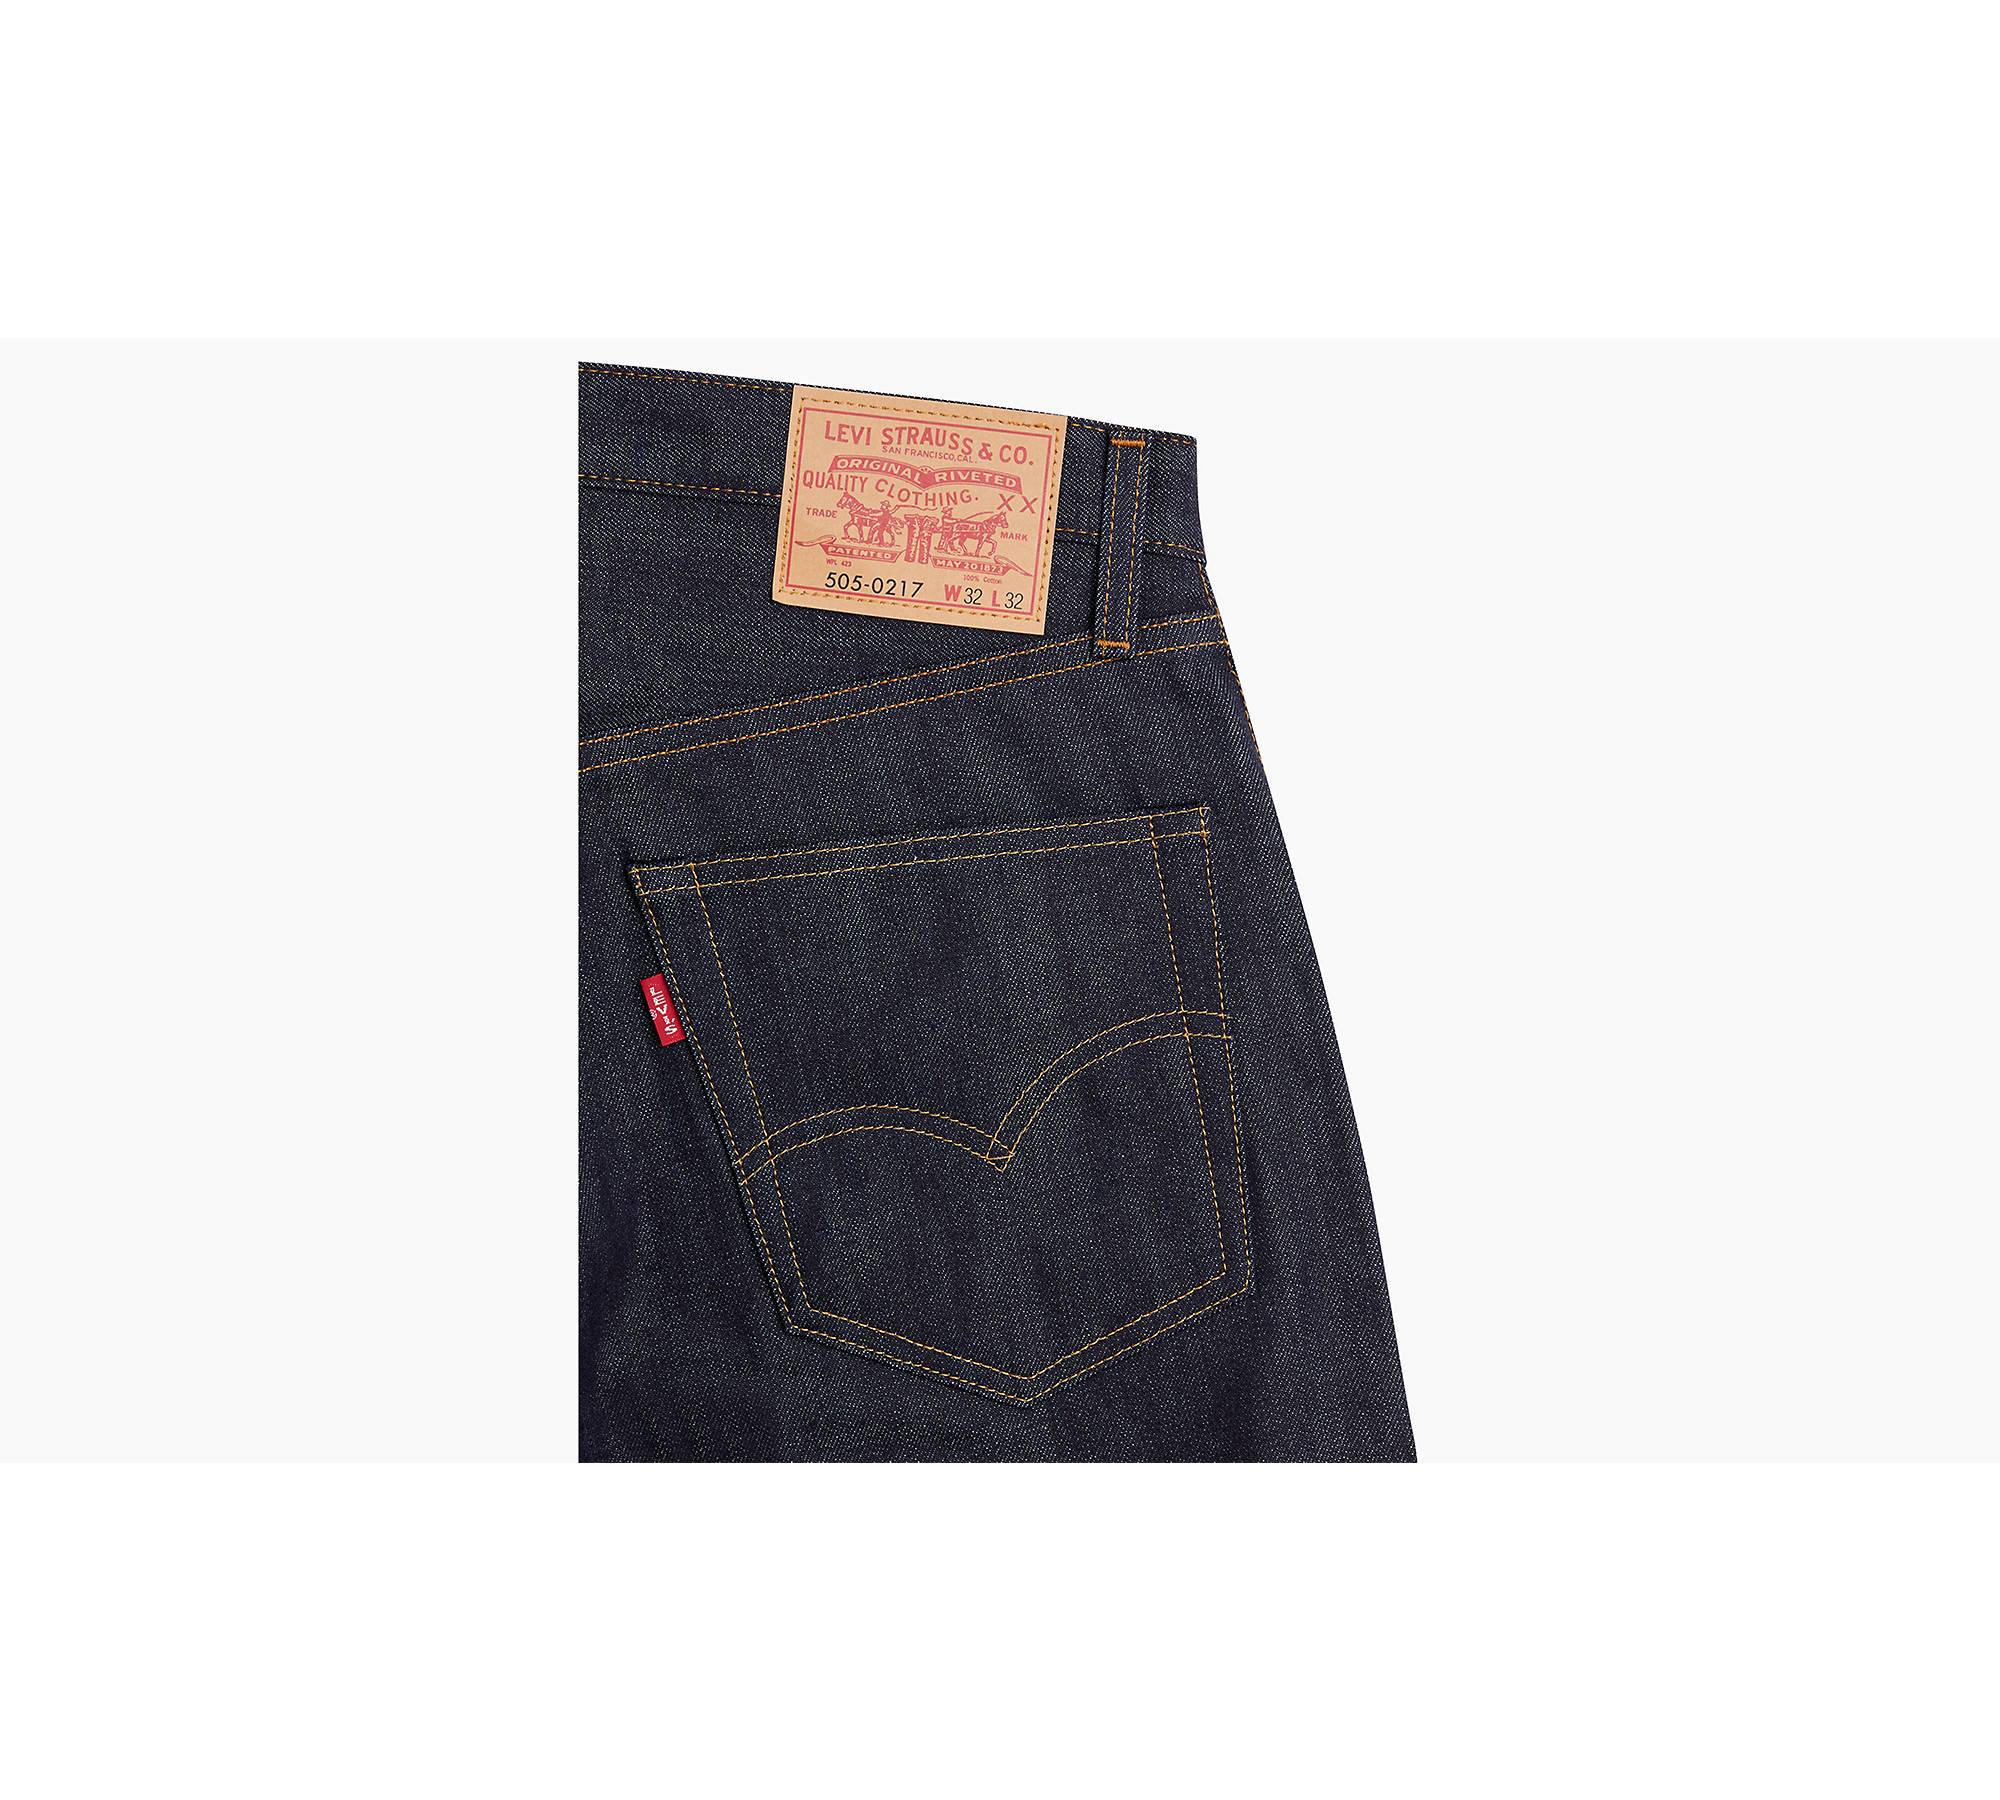 Levi's LVC 1947 Japan 501 Jeans Could Be the Brand's Best Pants